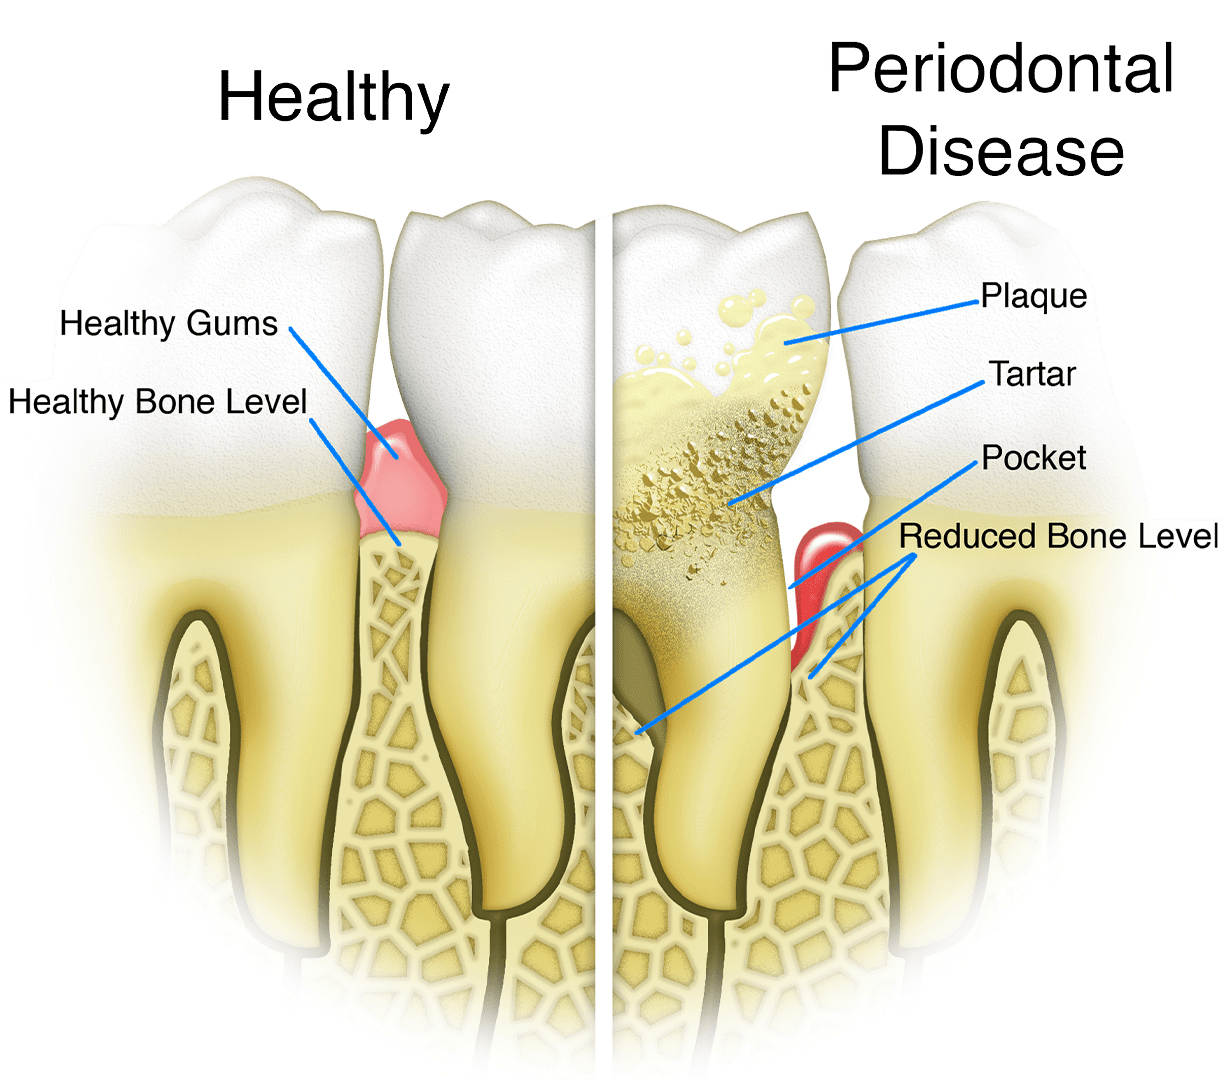 Periodontal Disease Detail Textbook Illustration